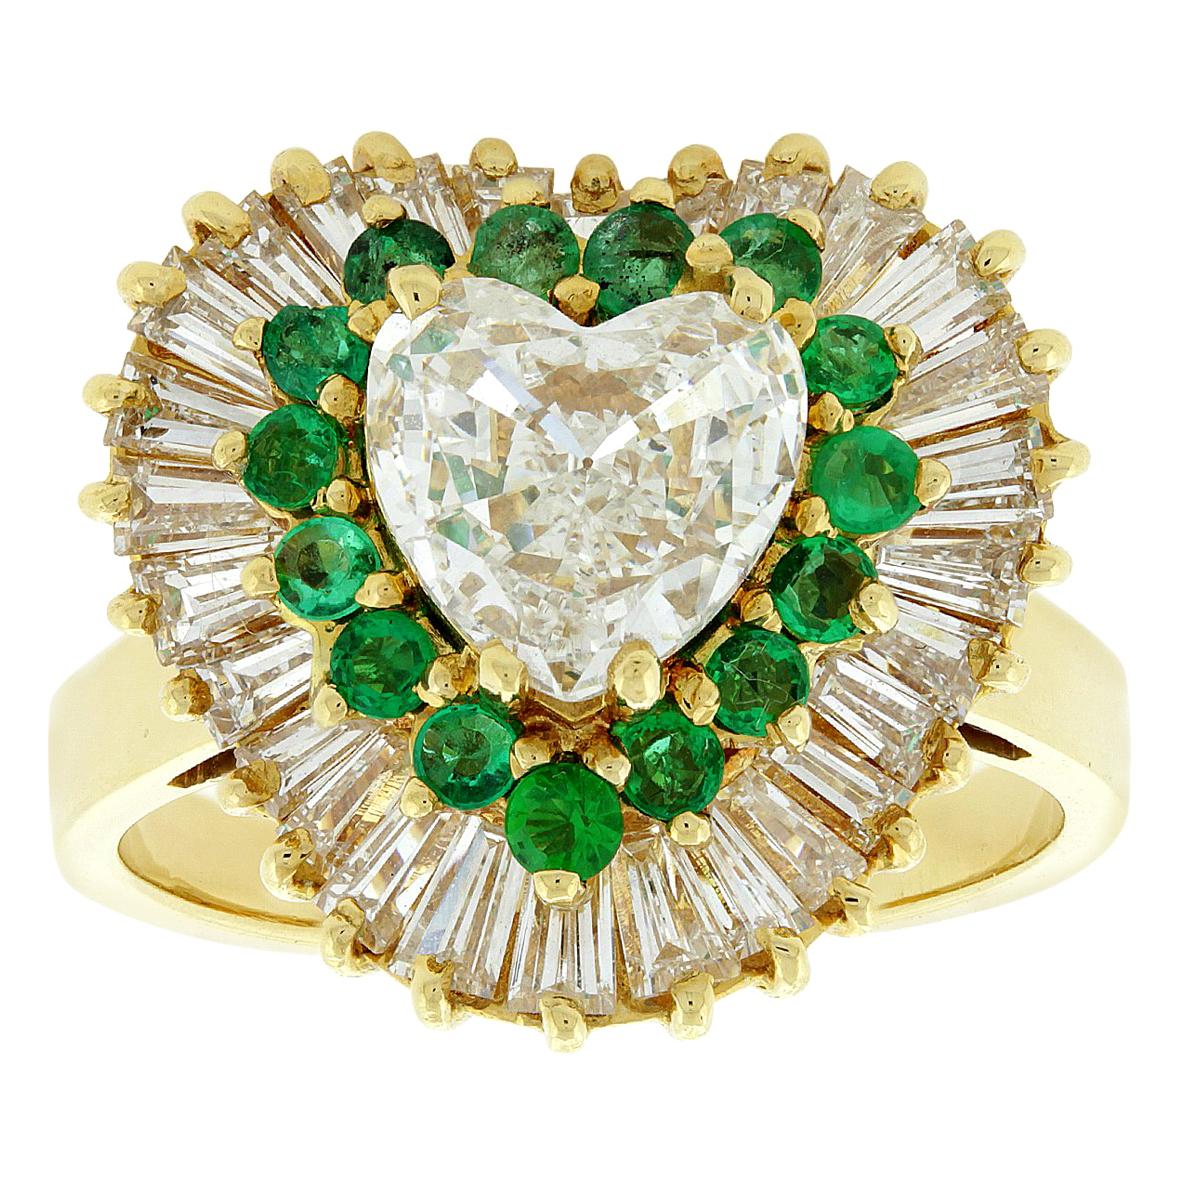 Goldring in Herzform mit Diamant-Smaragd-Halo